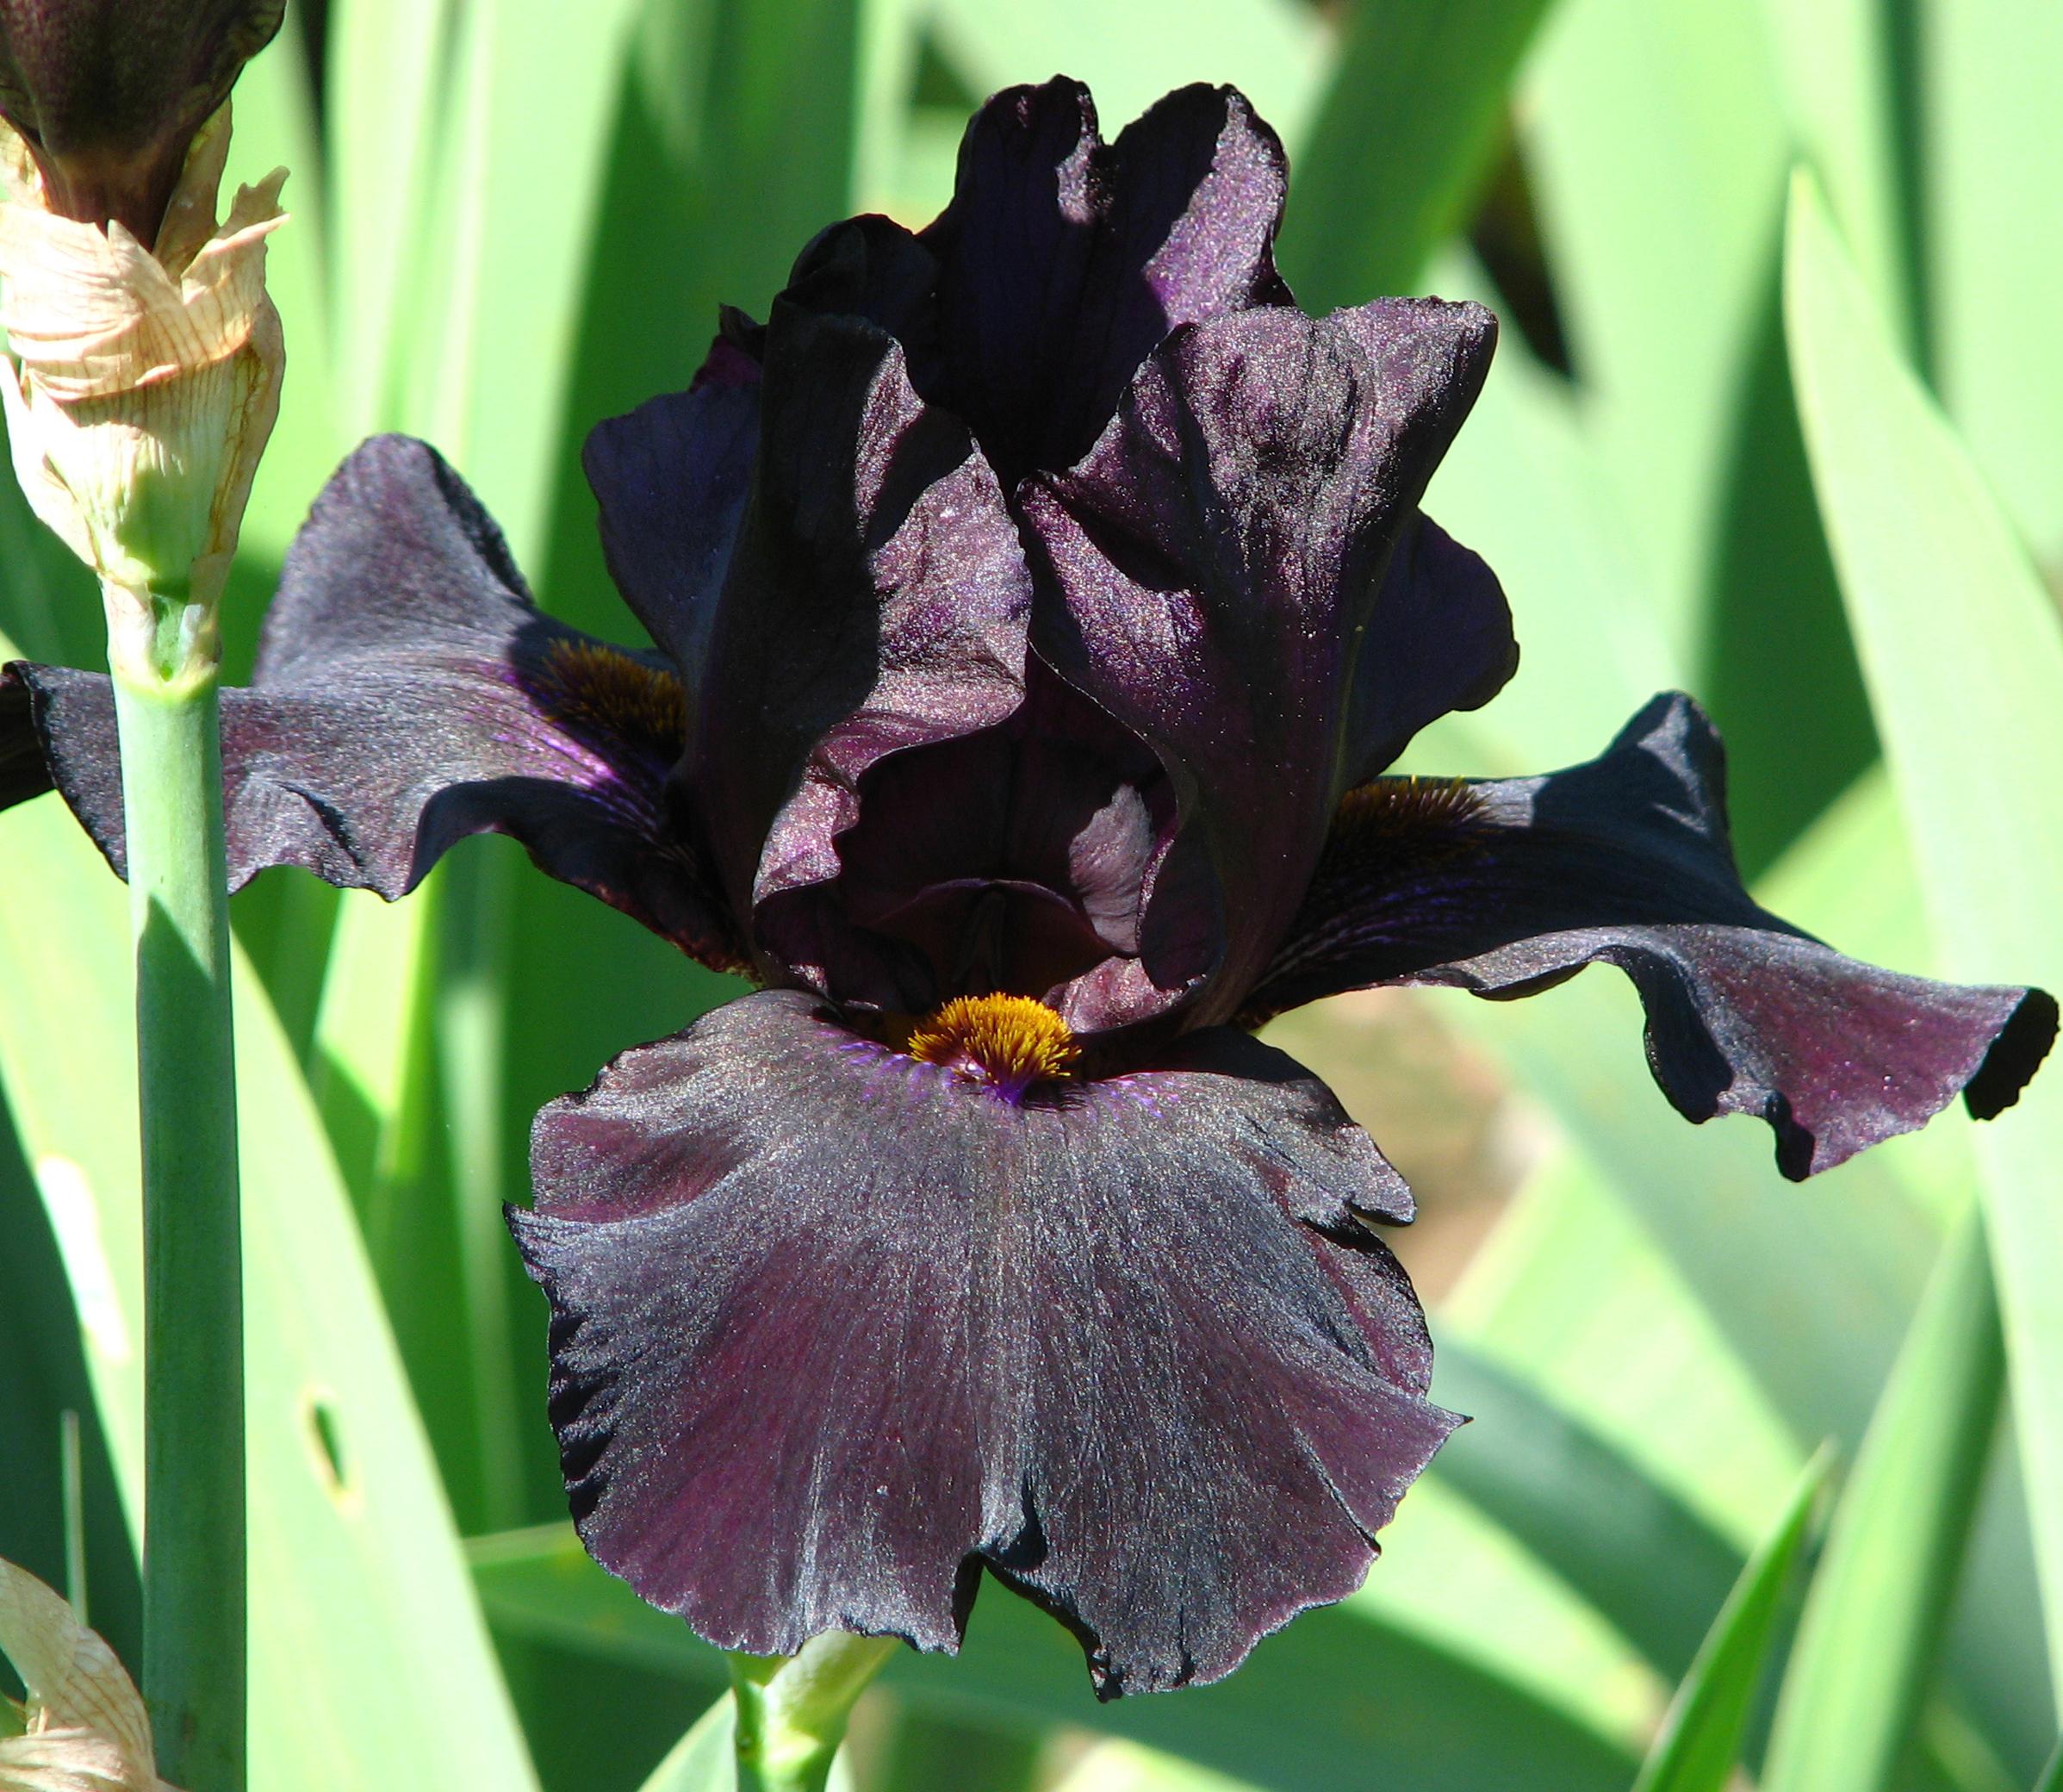 Iris Germanica 'Black' - Tall Bearded Iris from Leo Berbee Bulb Company